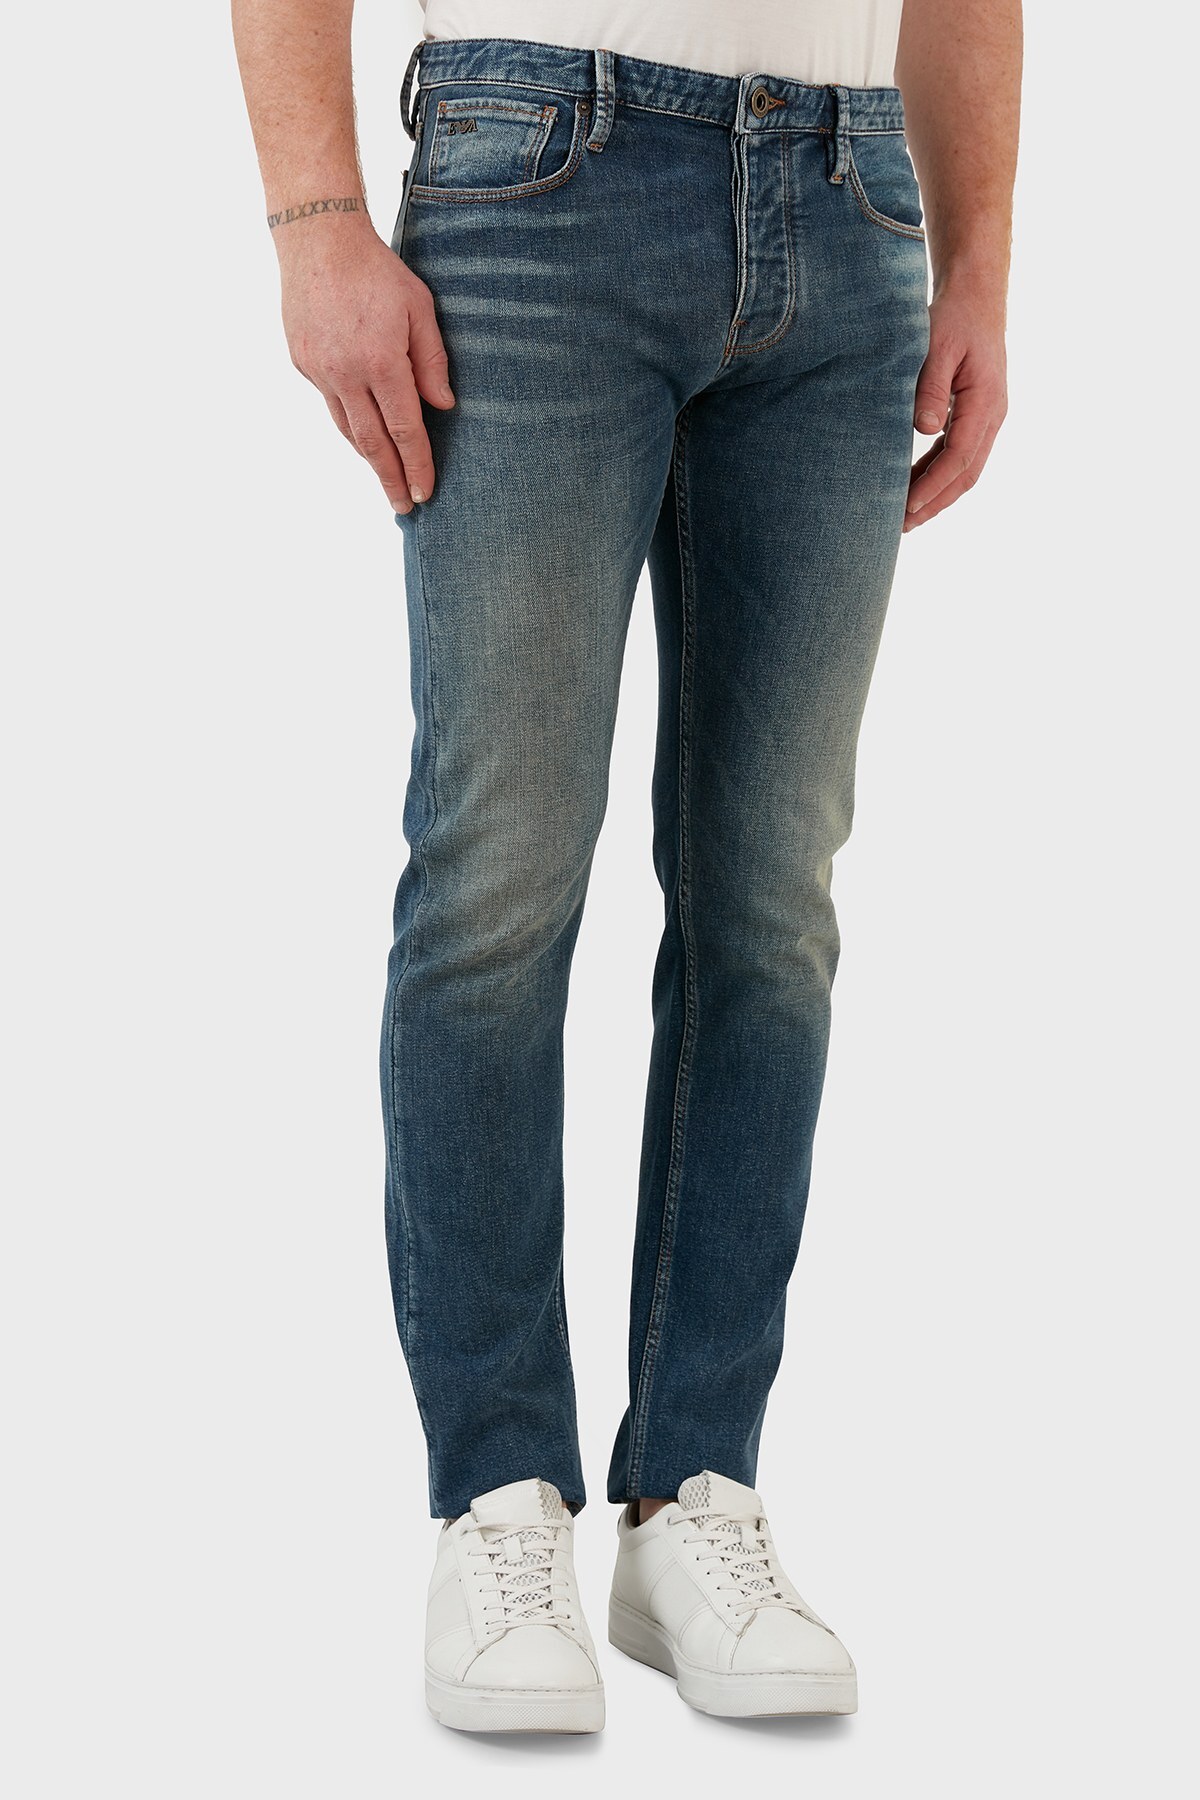 Emporio Armani Pamuklu Slim Fit Jeans Erkek Kot Pantolon 3L1J75 1DK2Z 0942 MAVİ